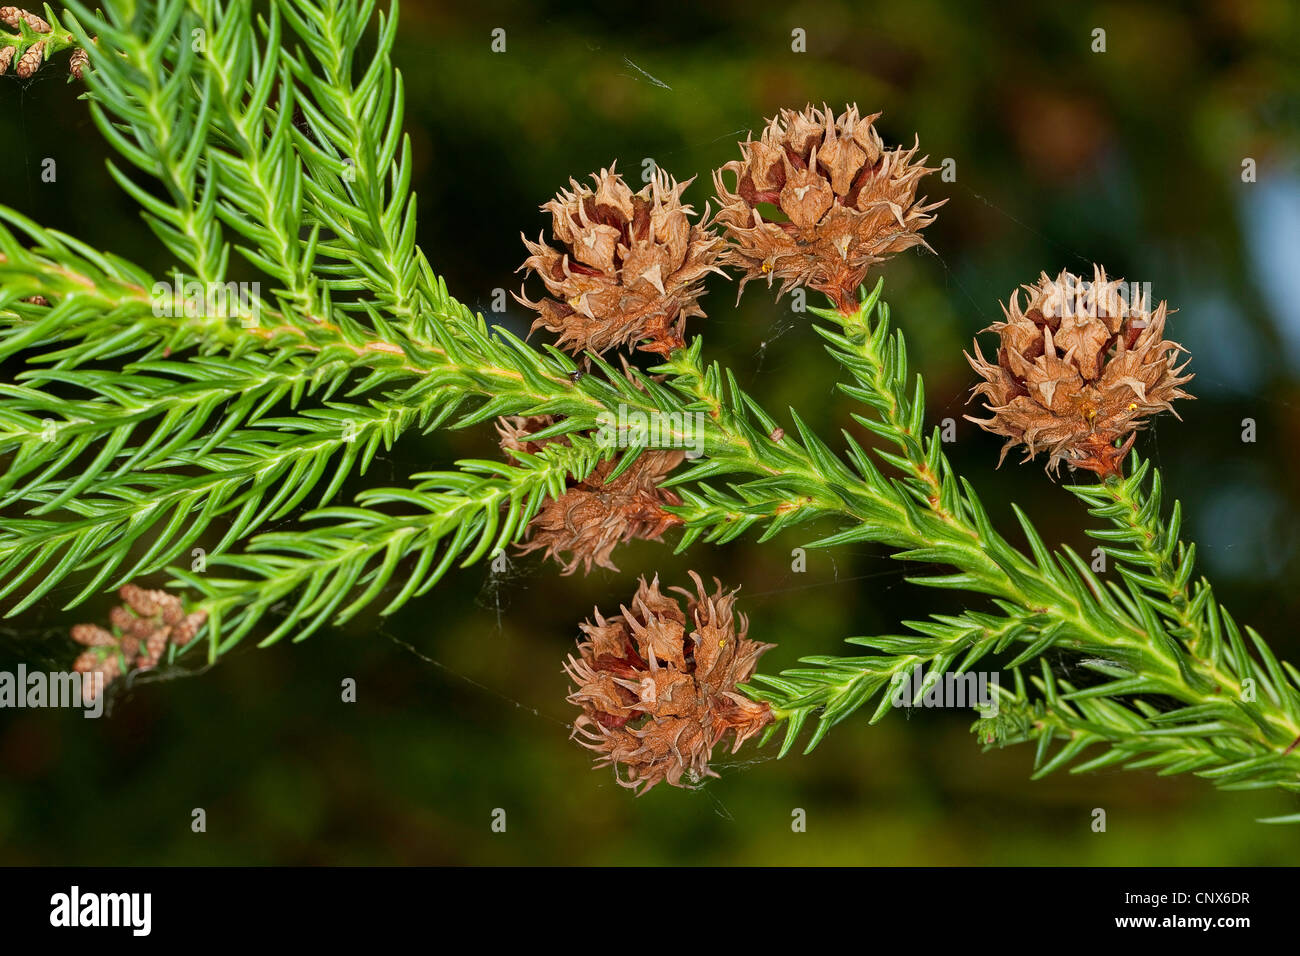 Japanese cedar (Cryptomeria japonica), branch with cones Stock Photo